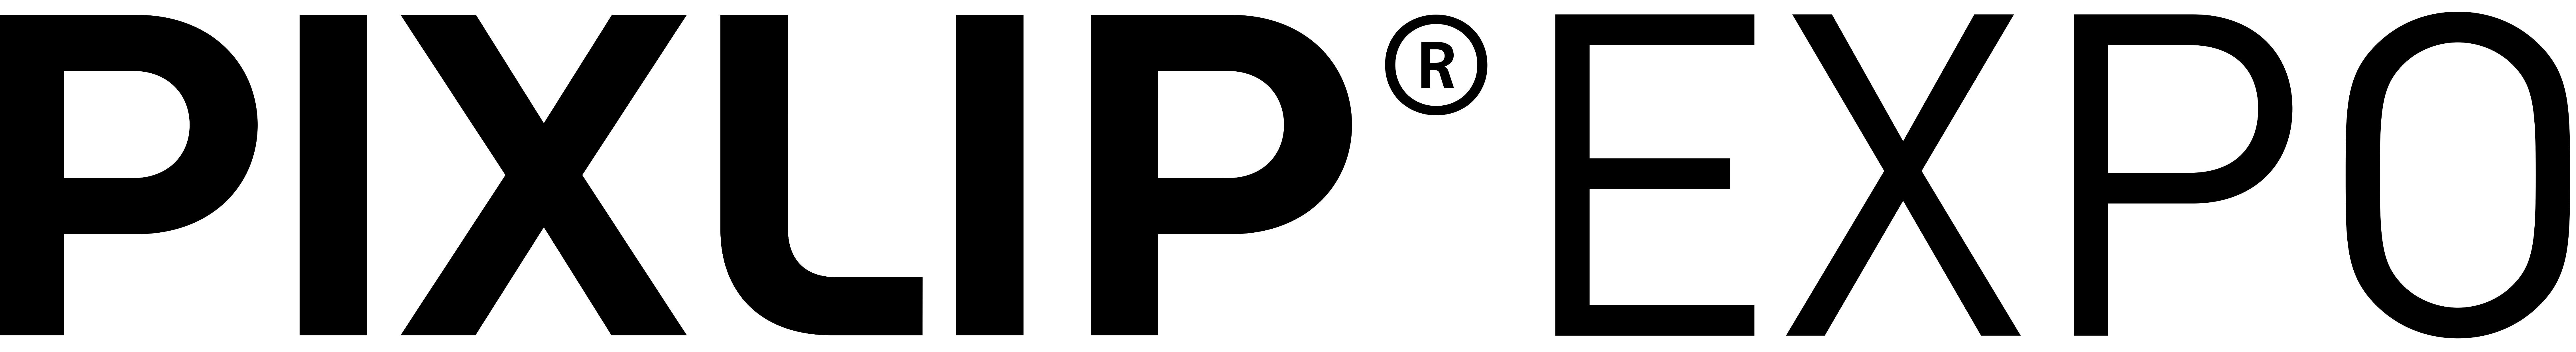 product-category-logo